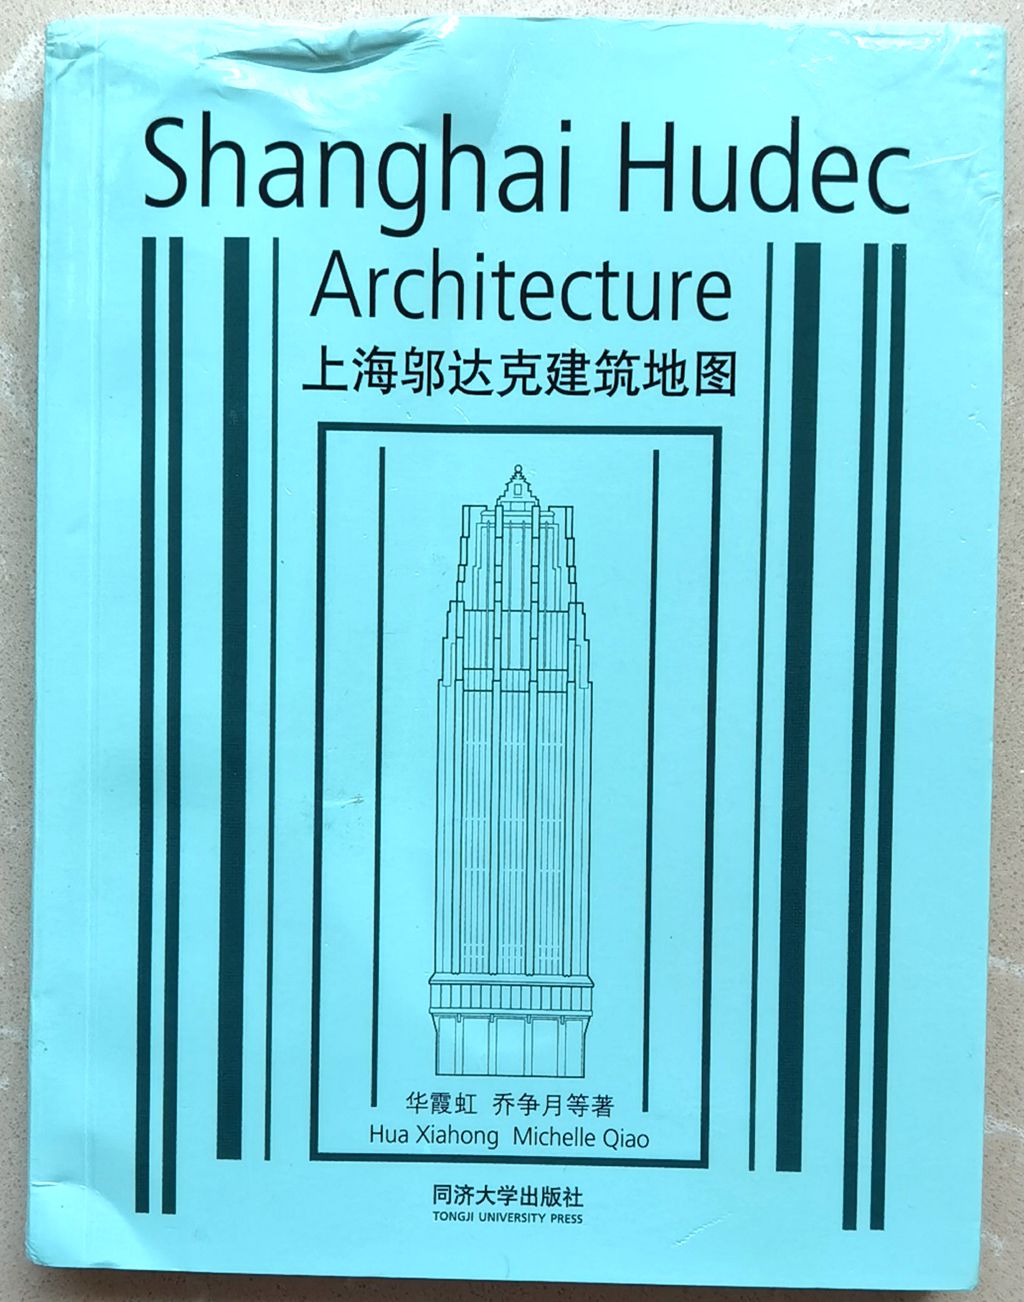 F6045, Book: Shanghai LASZLO HUDEC Architecture (2015)